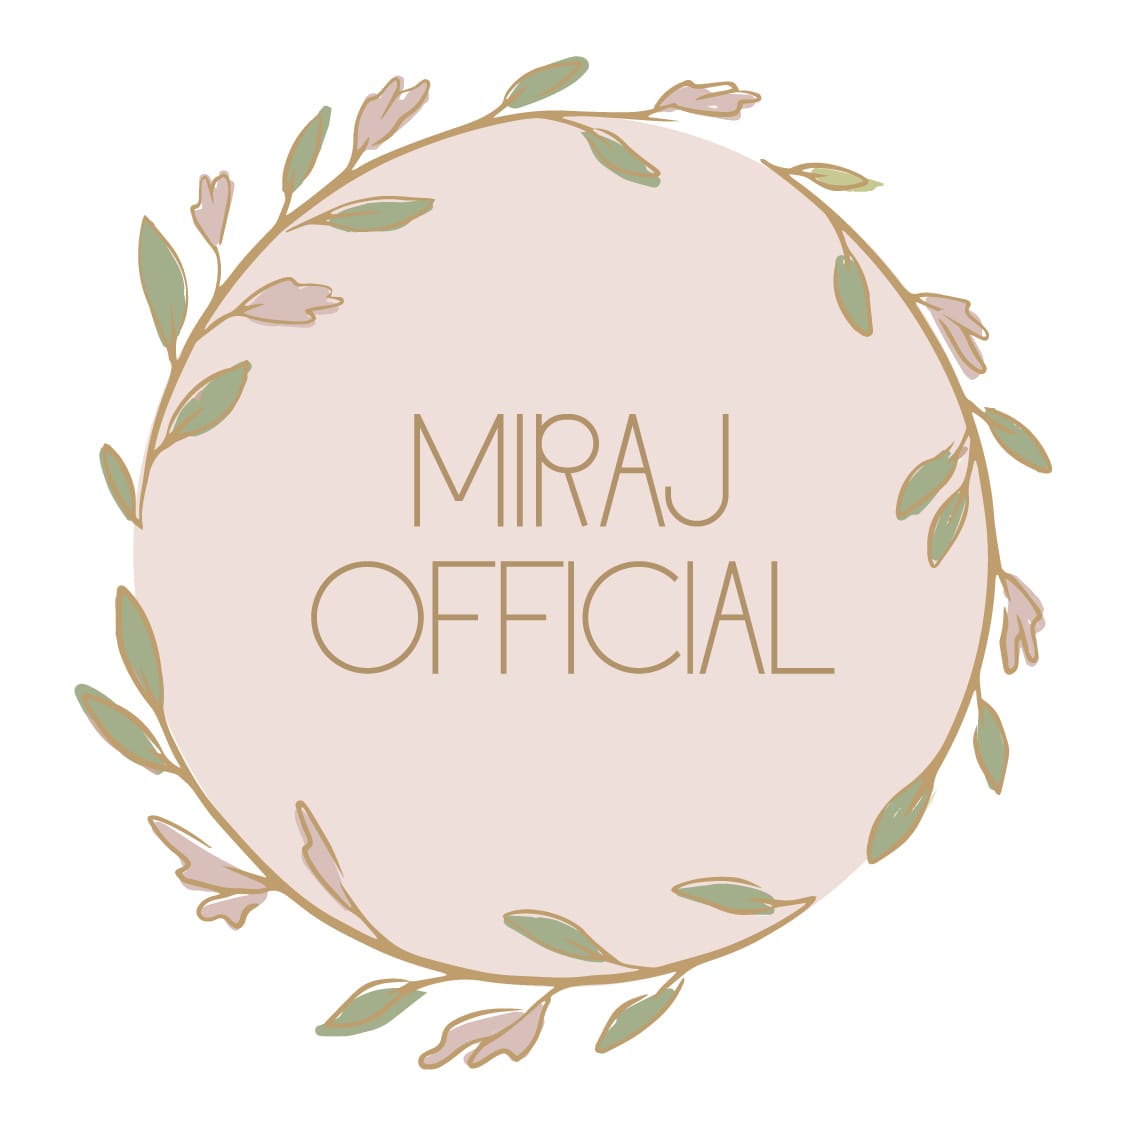 Miraj Official